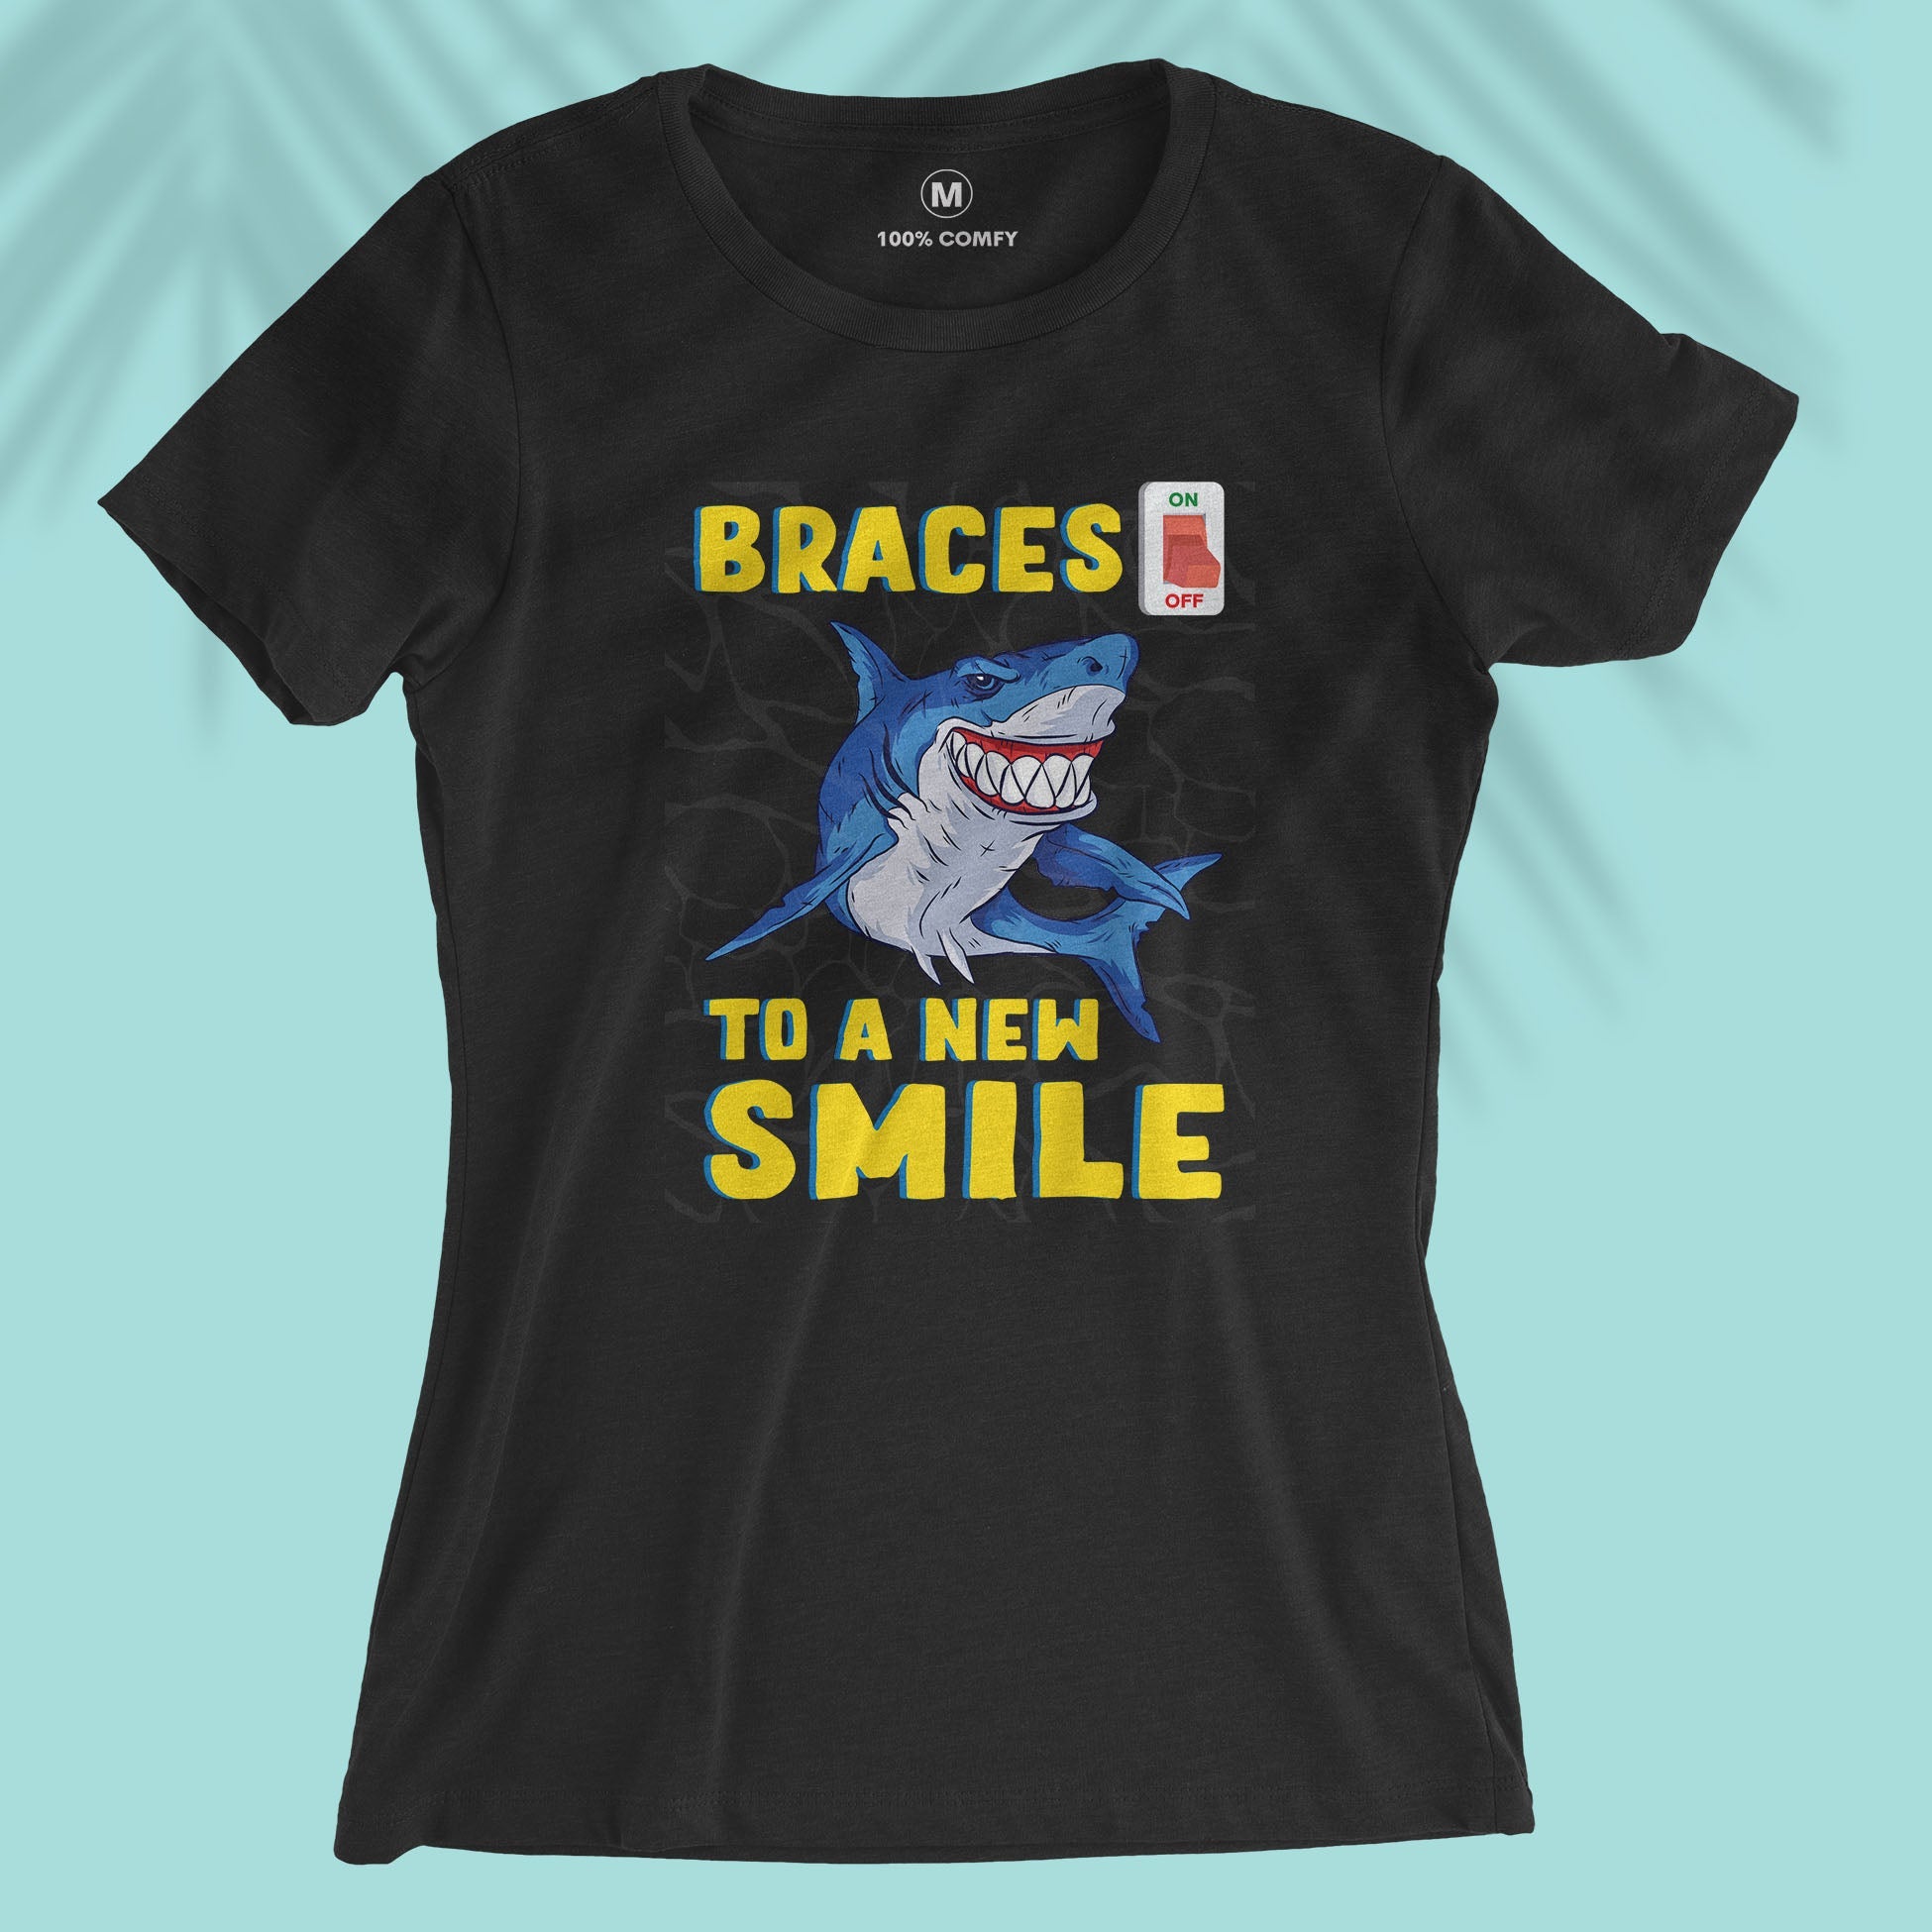 Braces ON/OFF - Women T-shirt